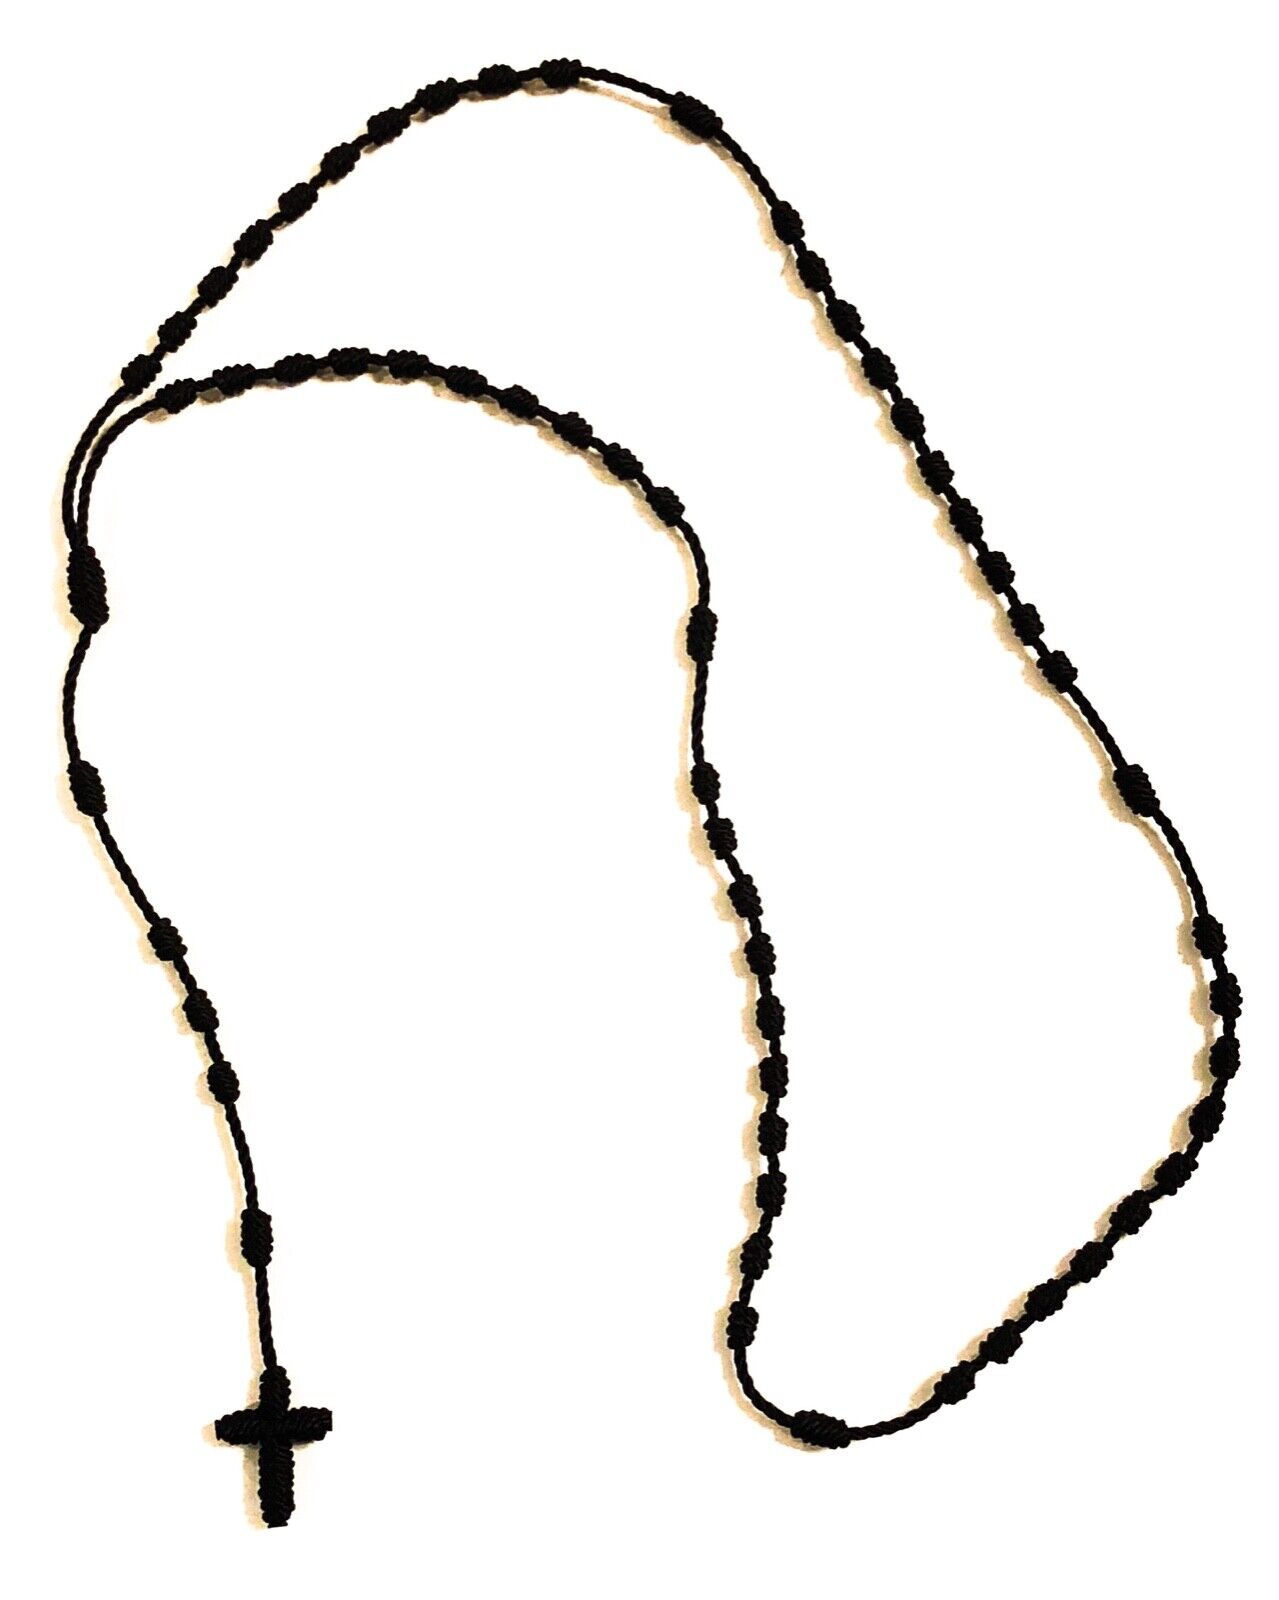 Knotted Rosary - 100% Nylon Thread - Black